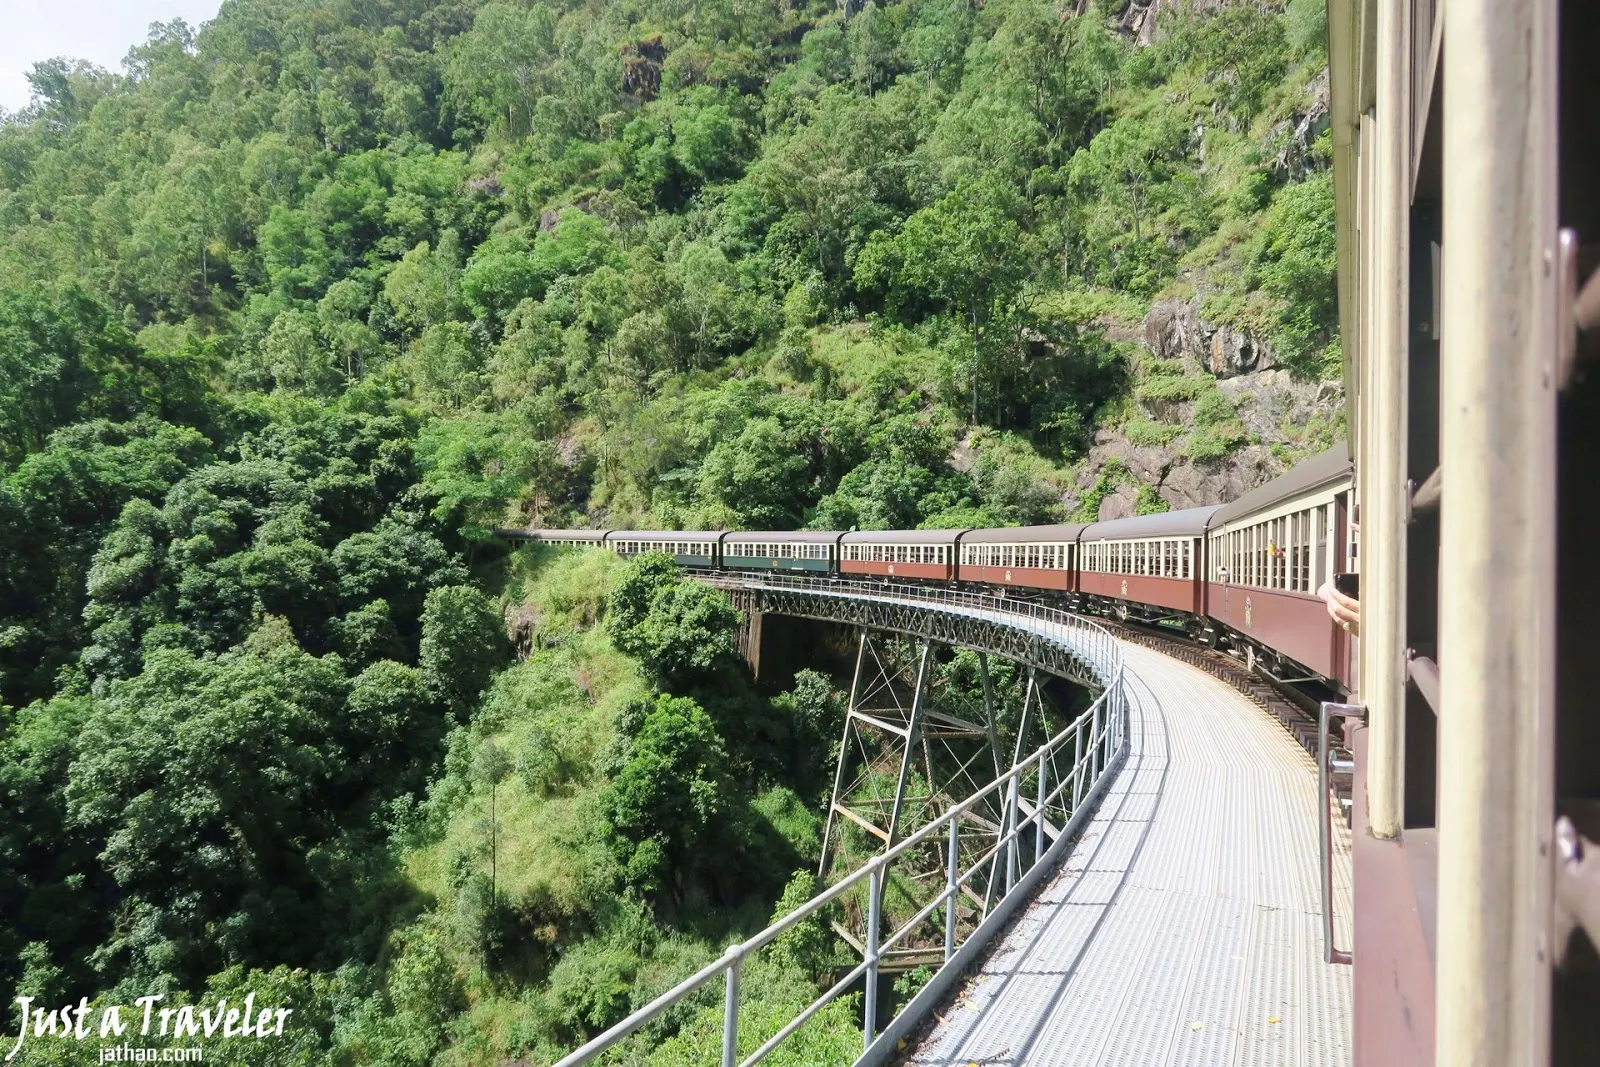 凱恩斯-景點-推薦-庫蘭達-火車-旅遊-自由行-澳洲-Cairns-Tourist-Attraction-Kuranda-Train-Travel-Australia